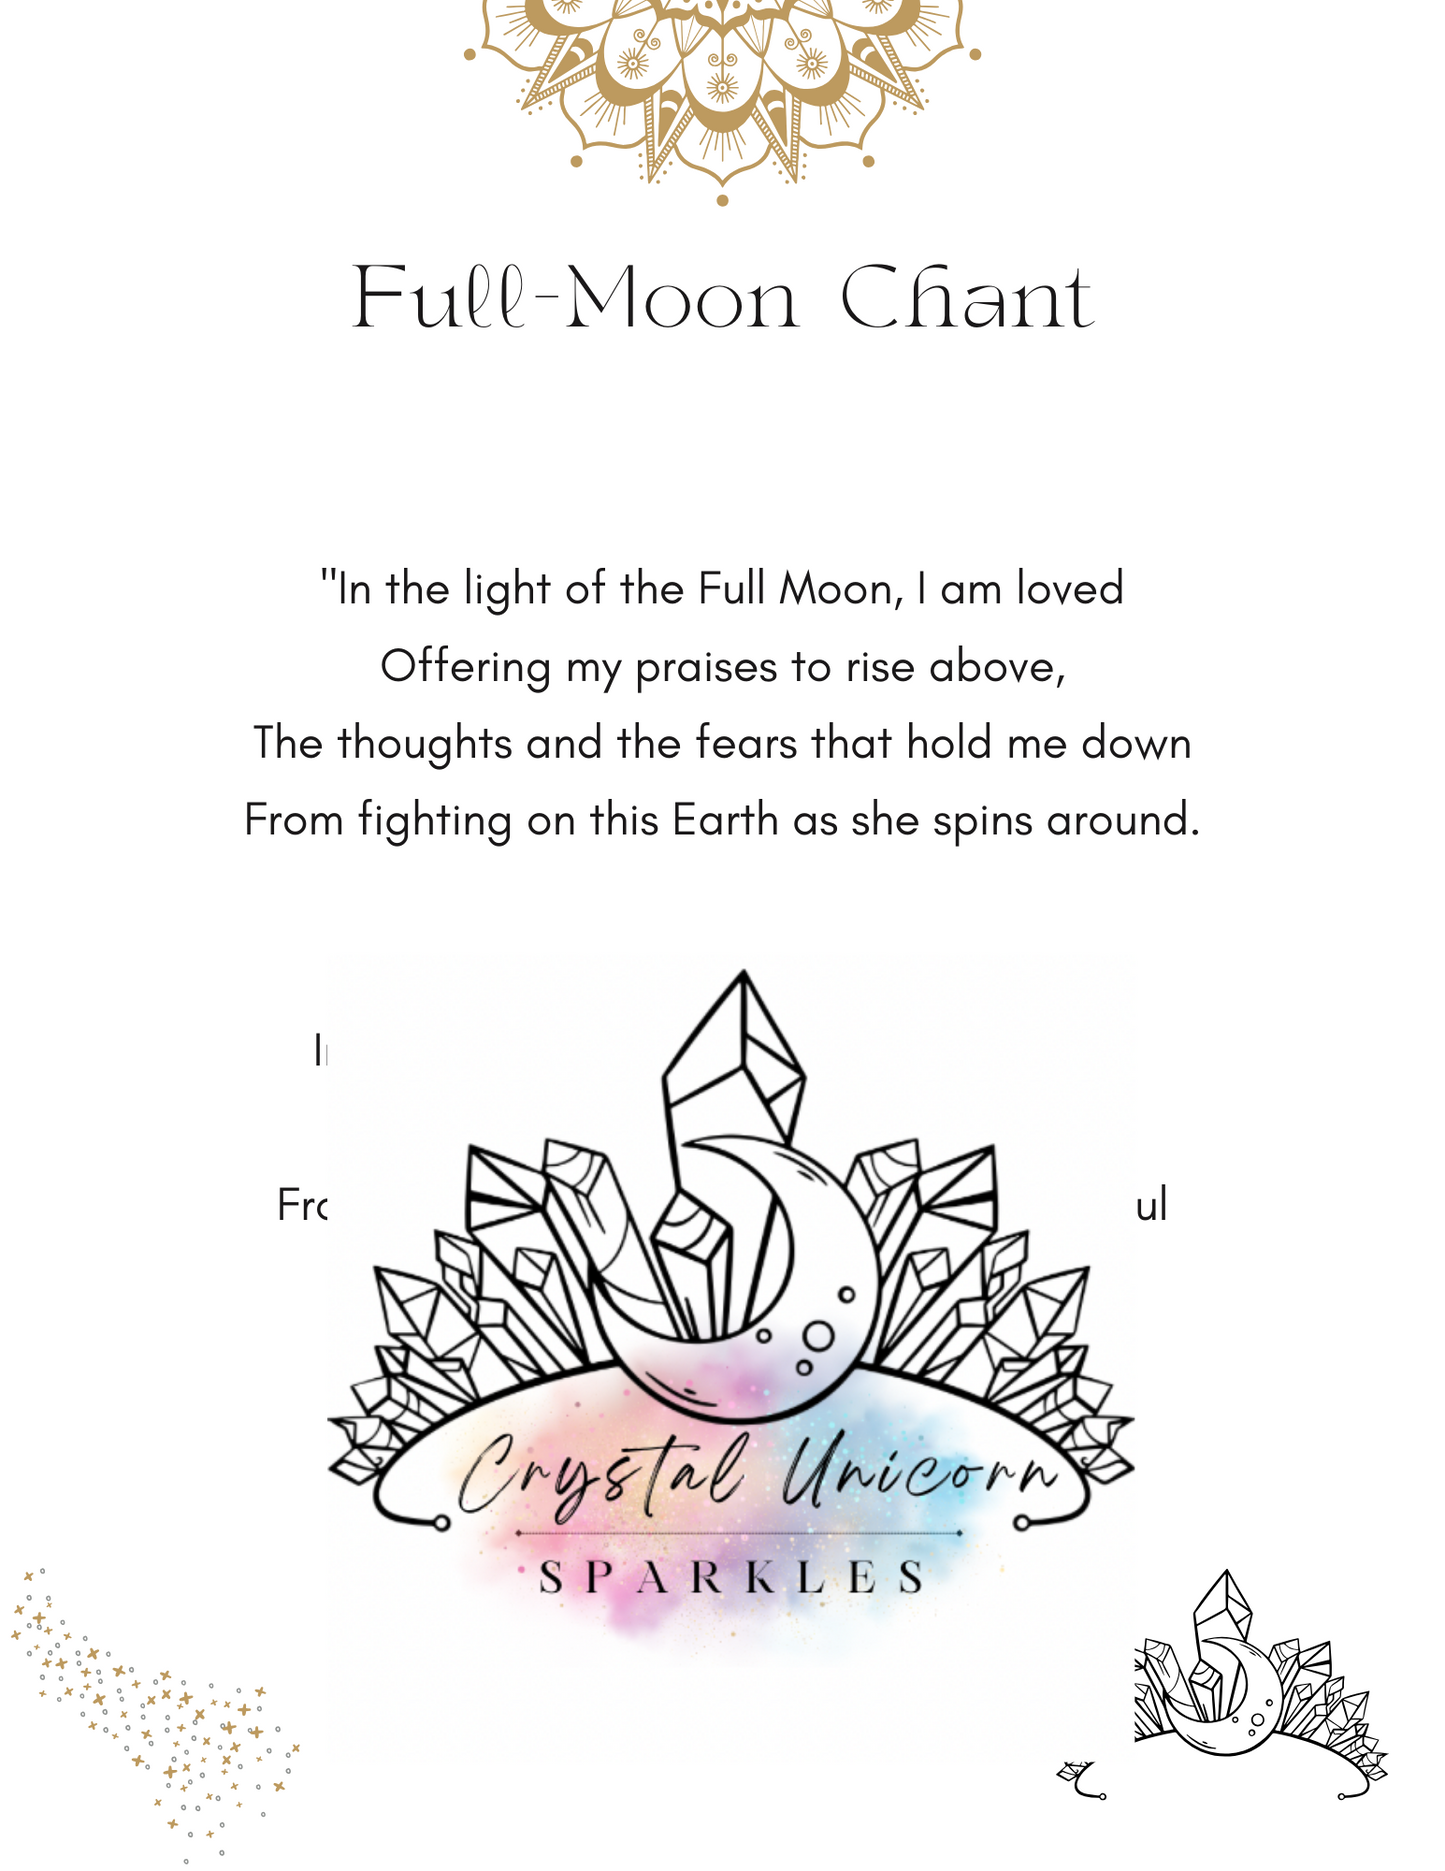 A Full Moon Eclipse in Libra Harvest Moon Moon Digital / Printable Work Book